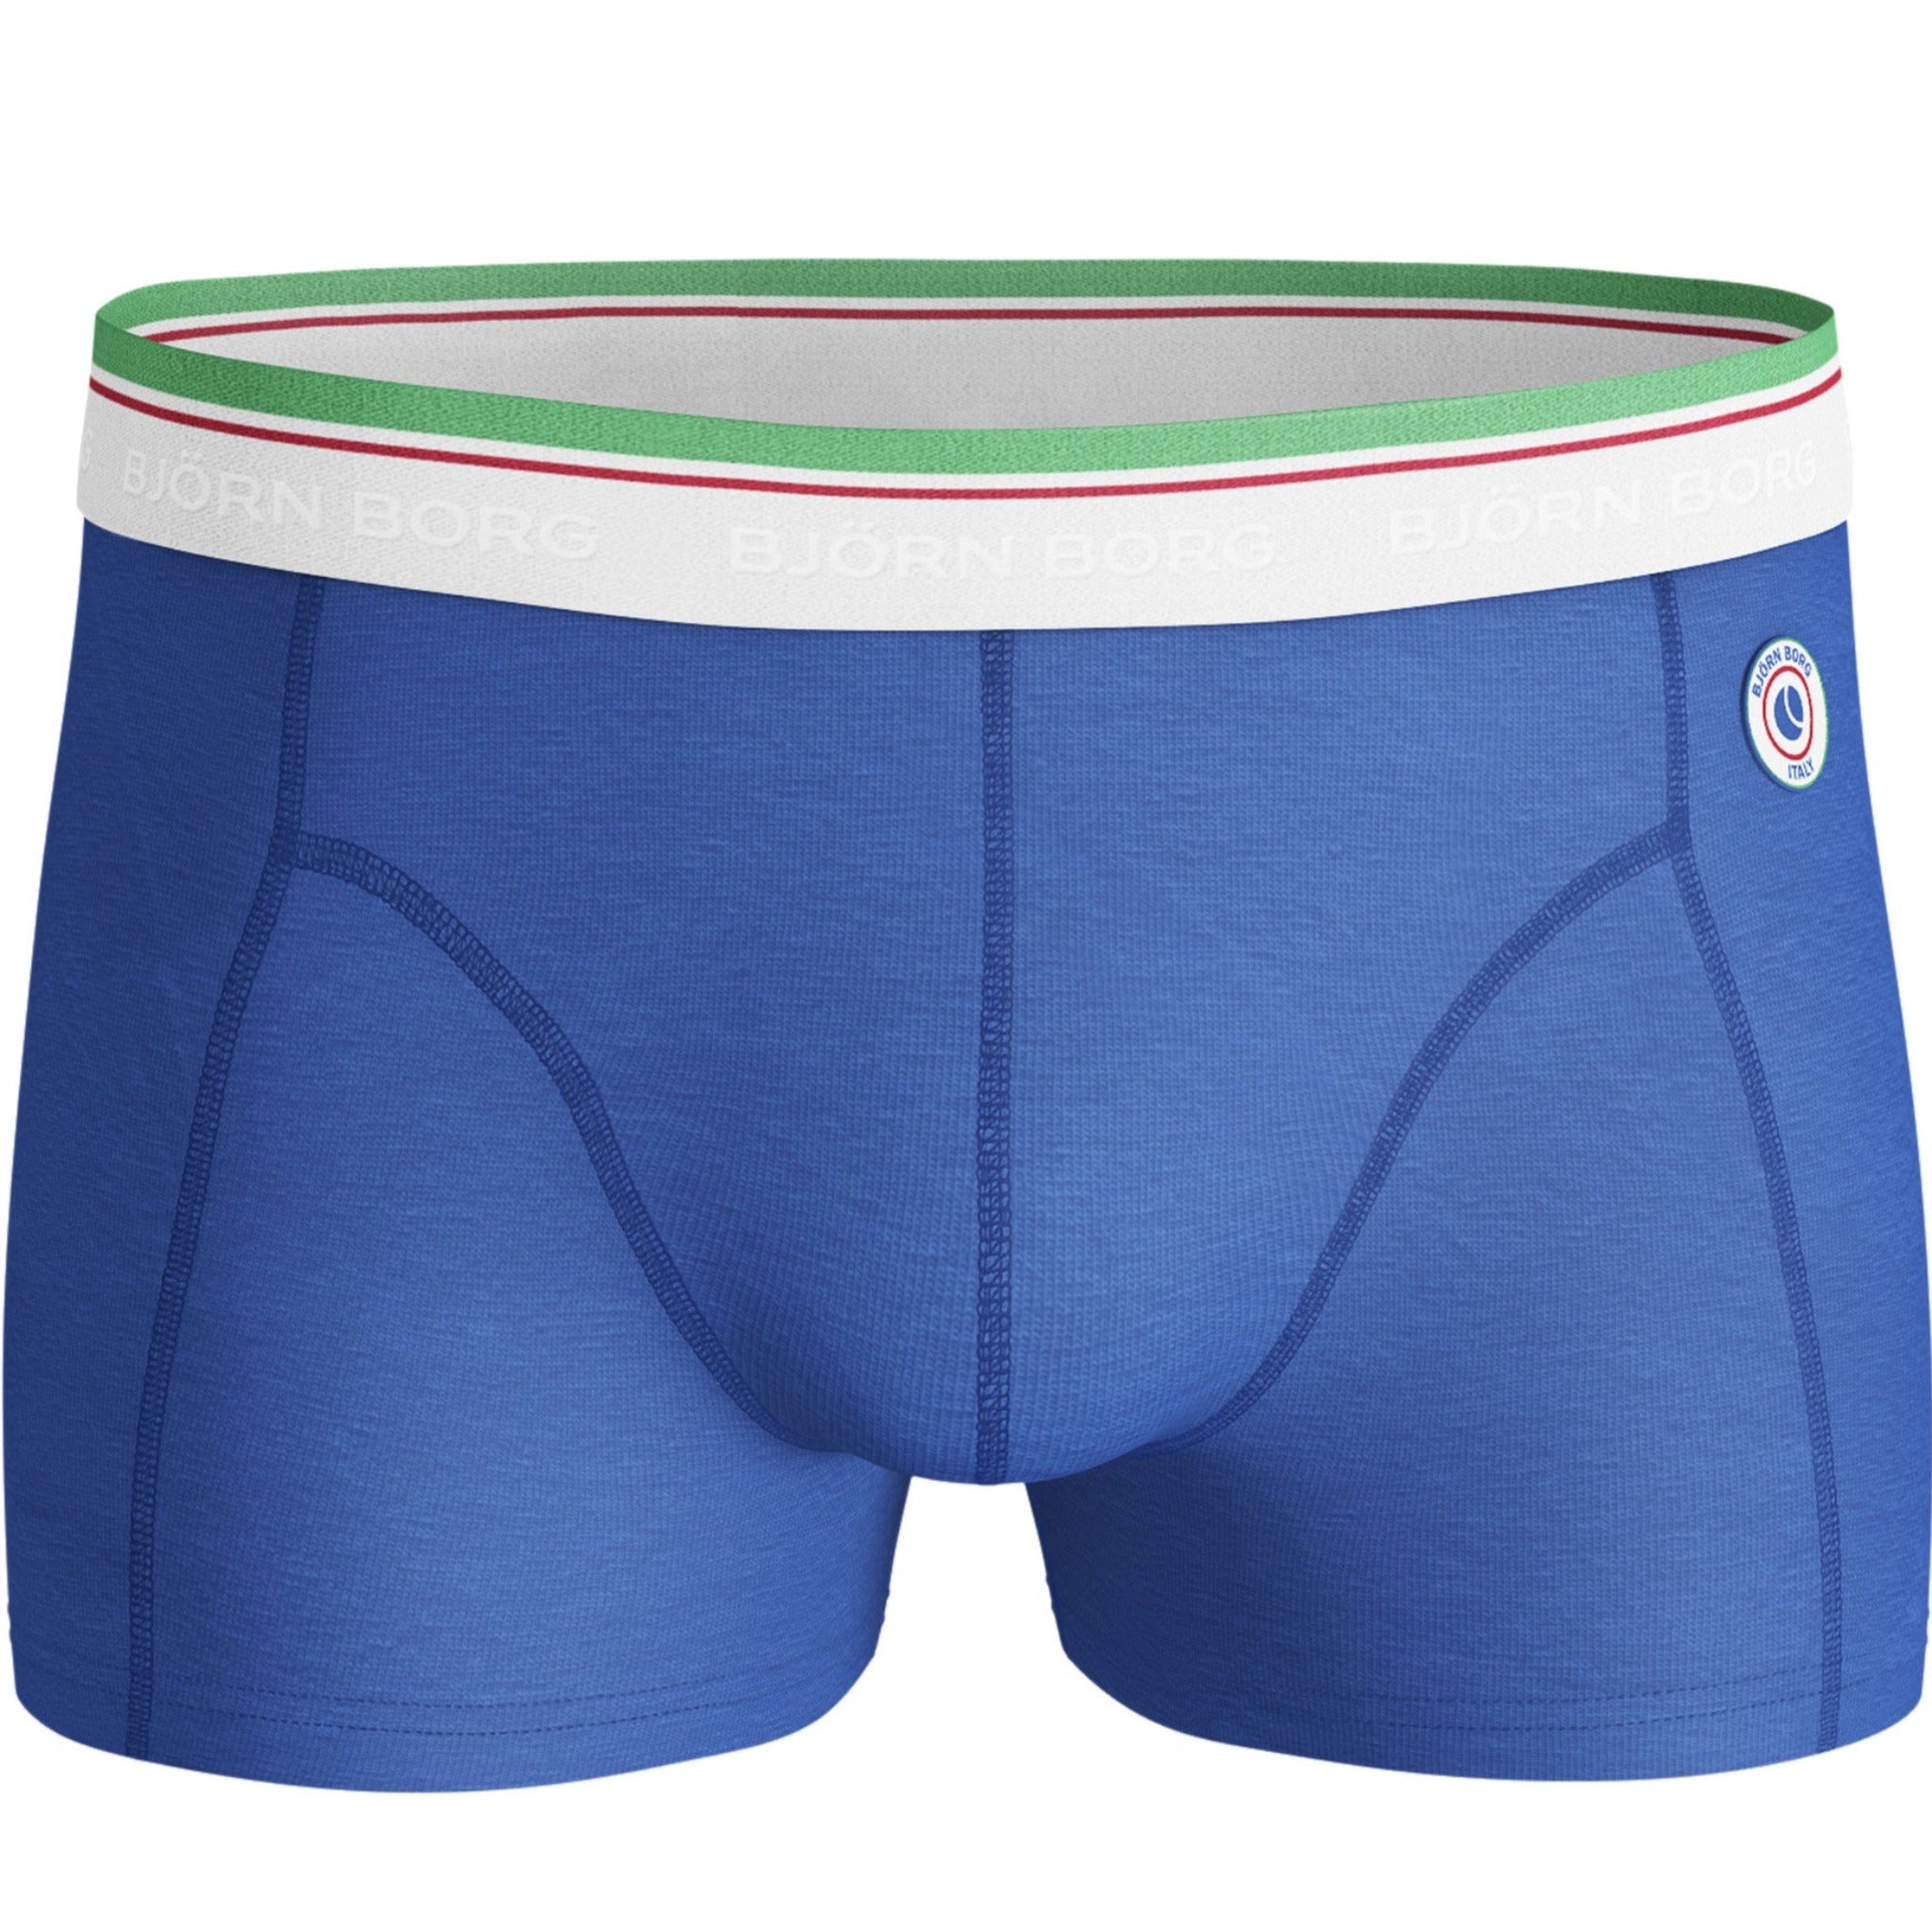 Bjorn Borg Italy short underwear for men